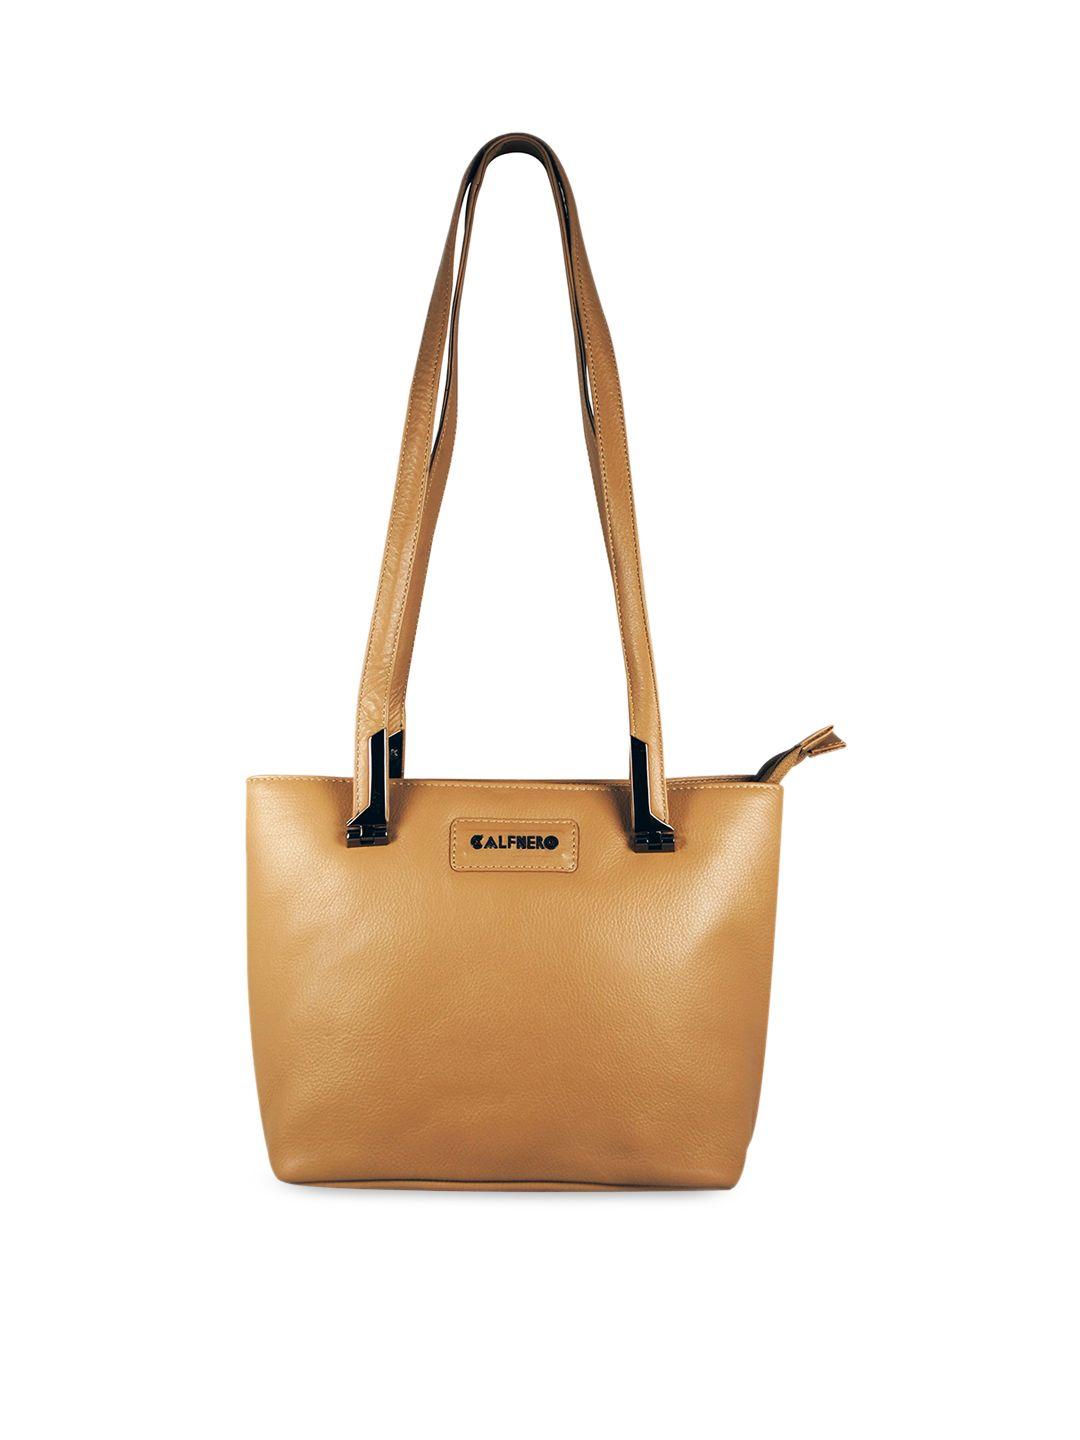 calfnero-women-beige-leather-structured-shoulder-bag